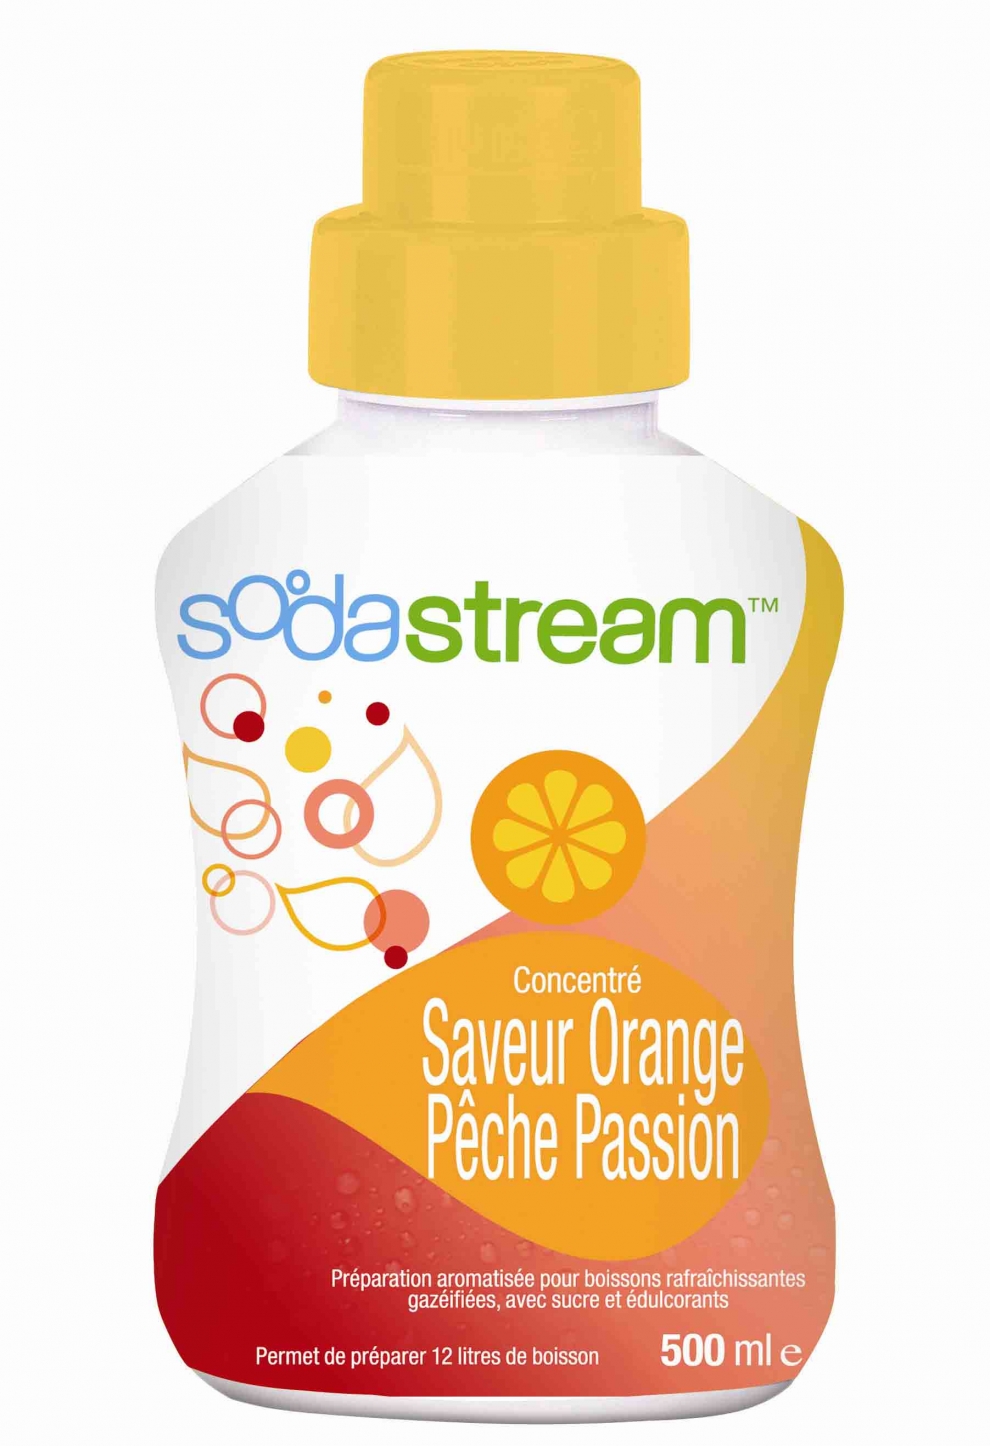 Concentré saveur orange Sodastream - 500ml